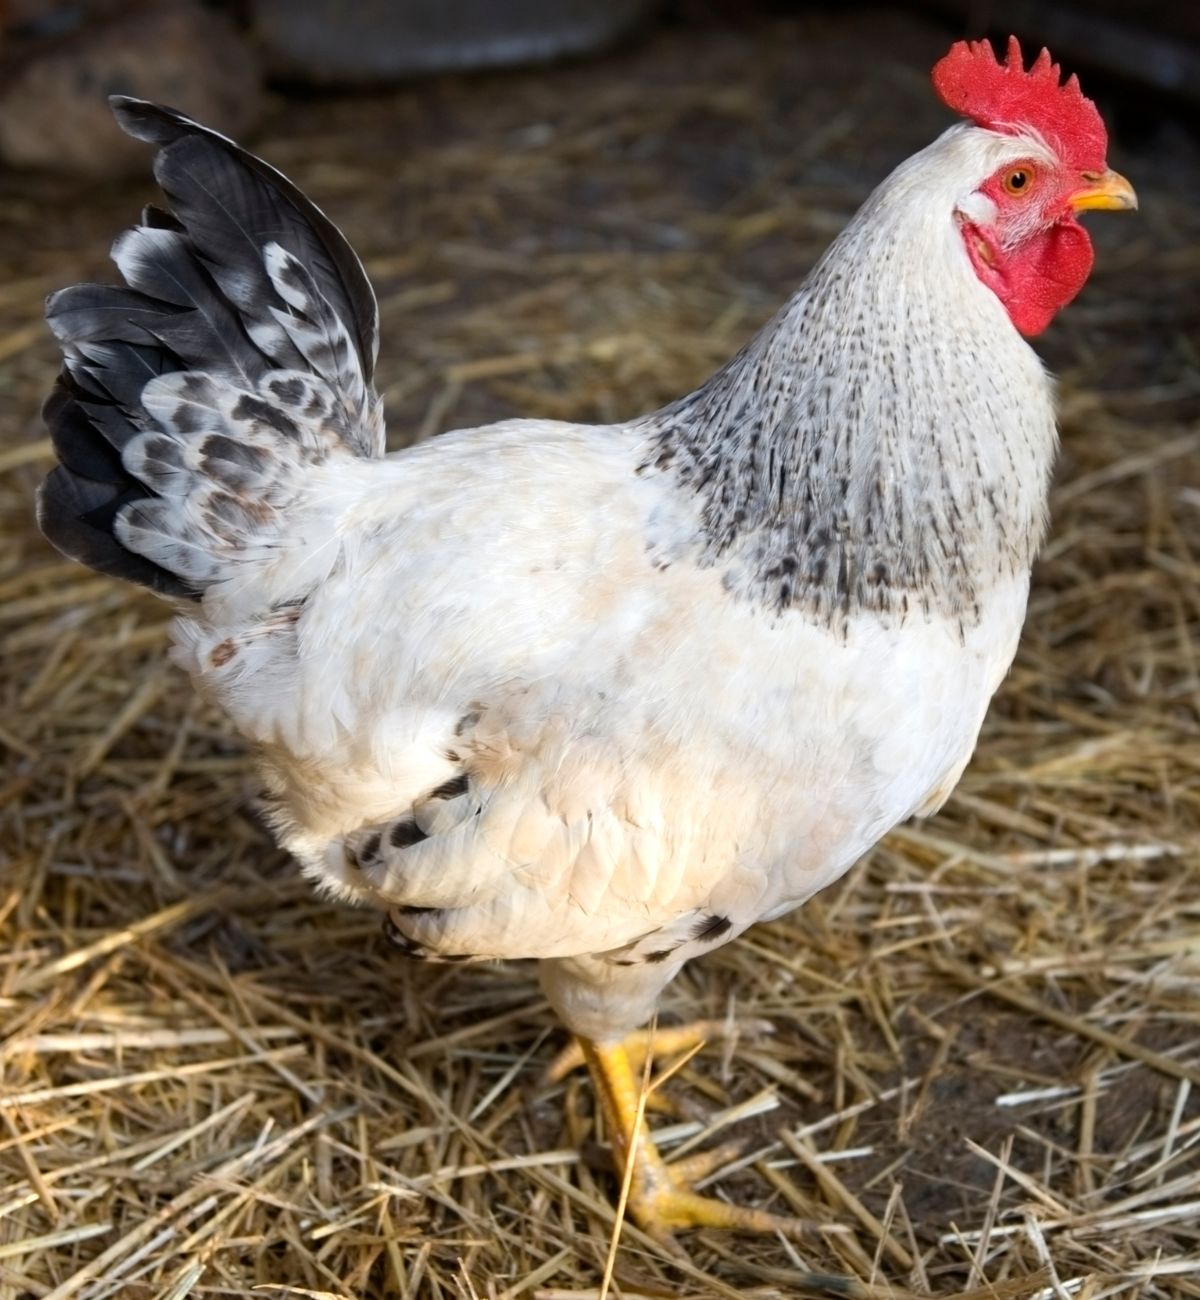 A big Delaware Chicken rooster in a chicken coop.